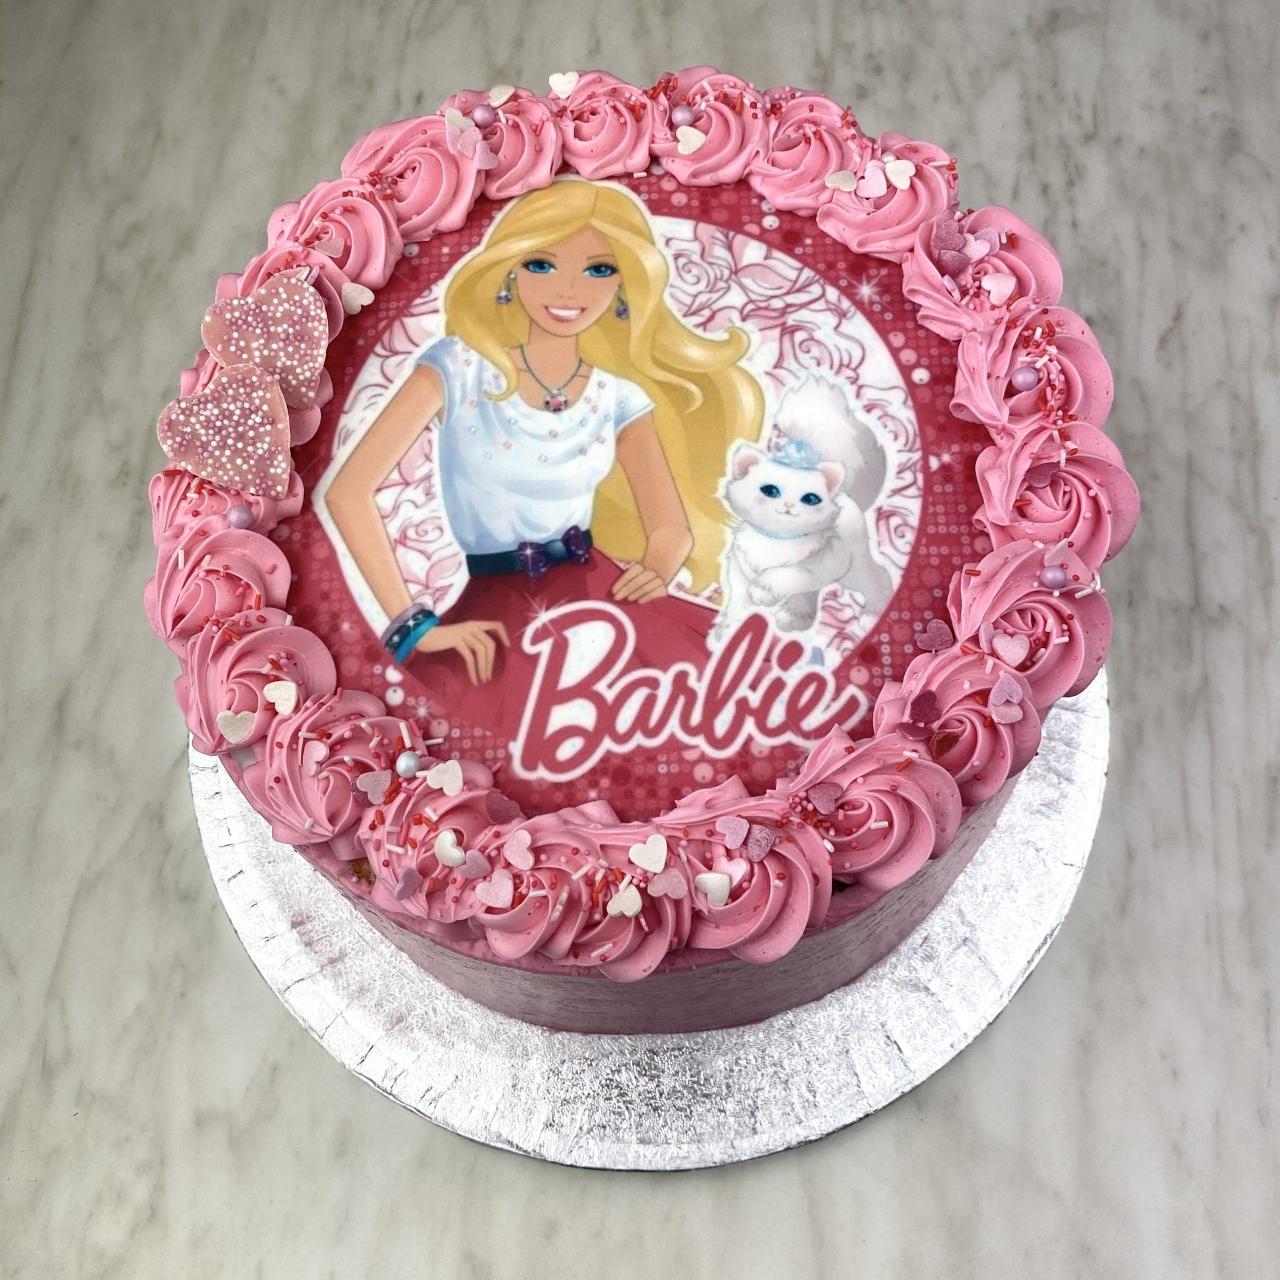 Barbie cake decorations